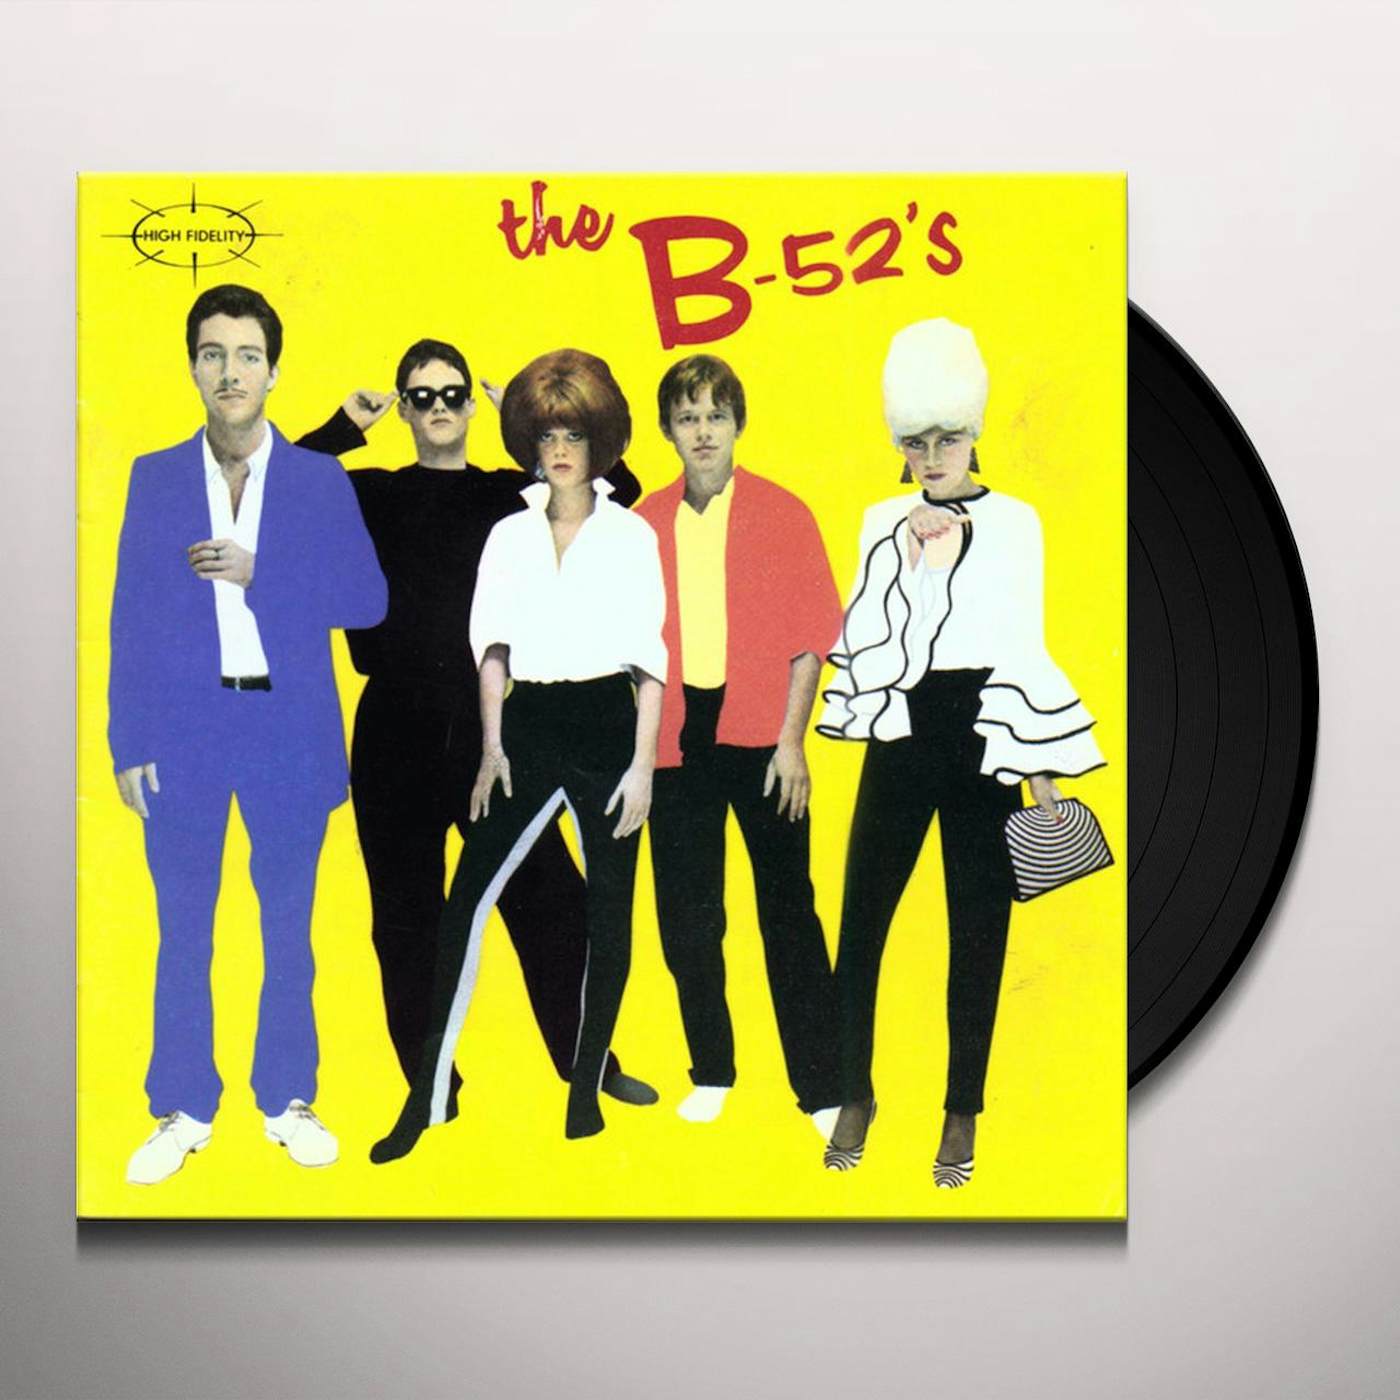 The B-52's Vinyl Record